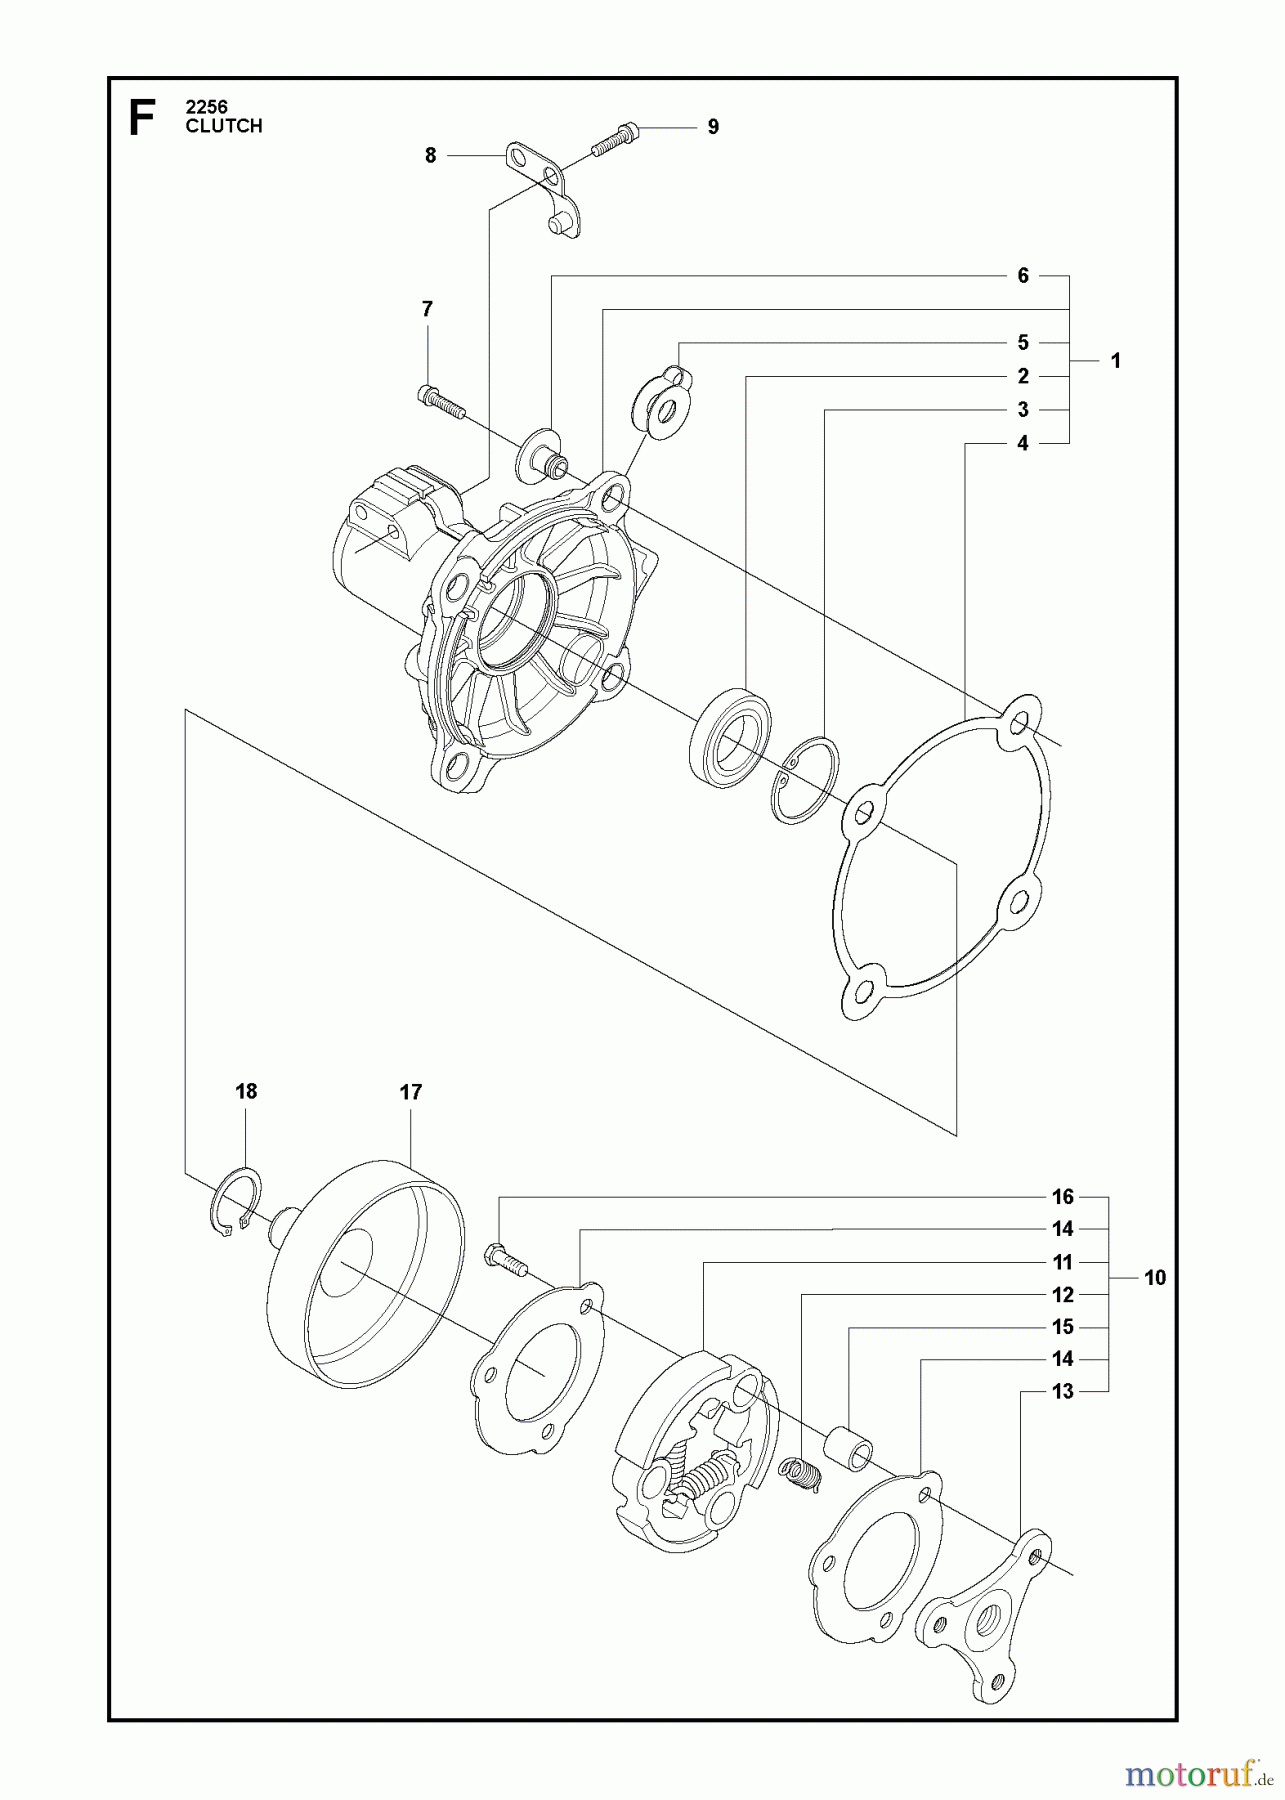  Jonsered Motorsensen, Trimmer FC2256 - Jonsered String/Brush Trimmer (2011-01) CLUTCH